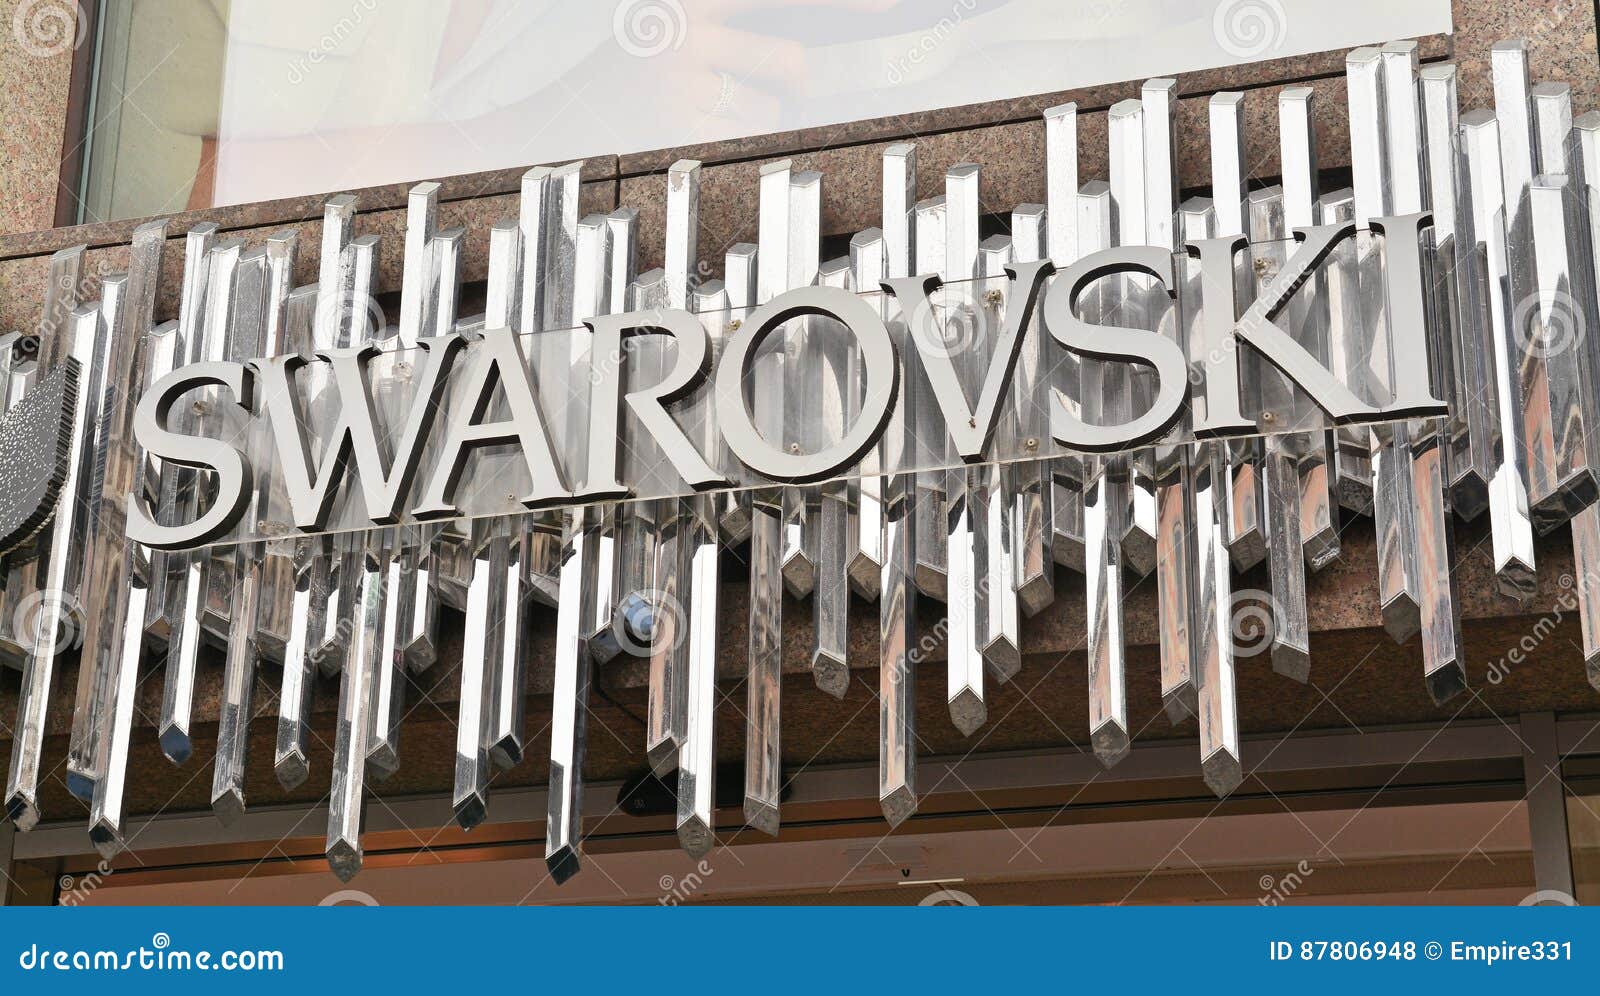 rok genie vervolgens Swarovski editorial stock photo. Image of germany, logo - 87806948